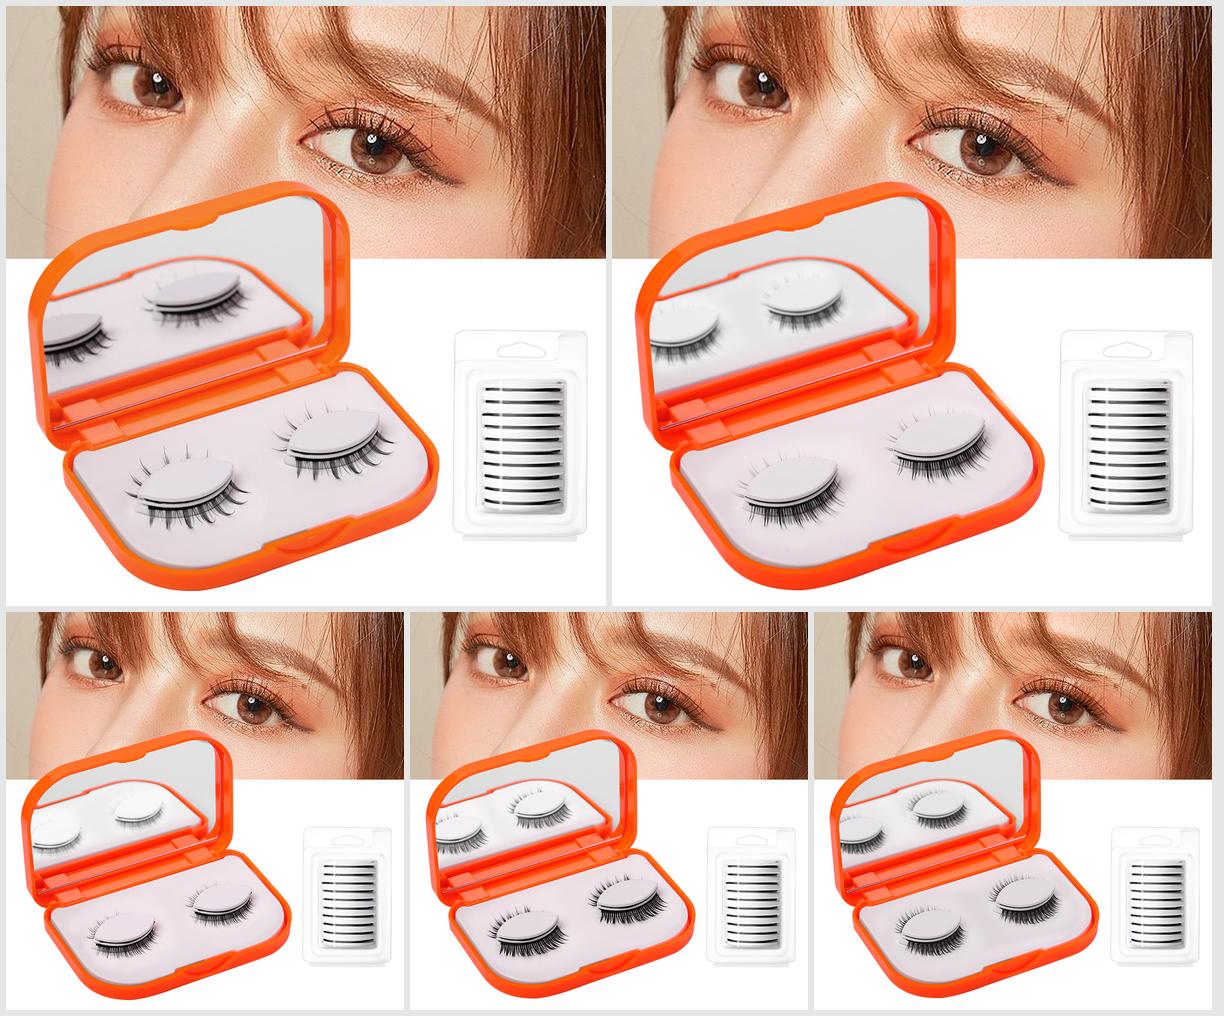 Two Pairs of Glue-Free Self-Adhesive False Eyelashes Soft Thin Rods Natural Extensions Warm Feeling Self-Adhesive Eyelashes